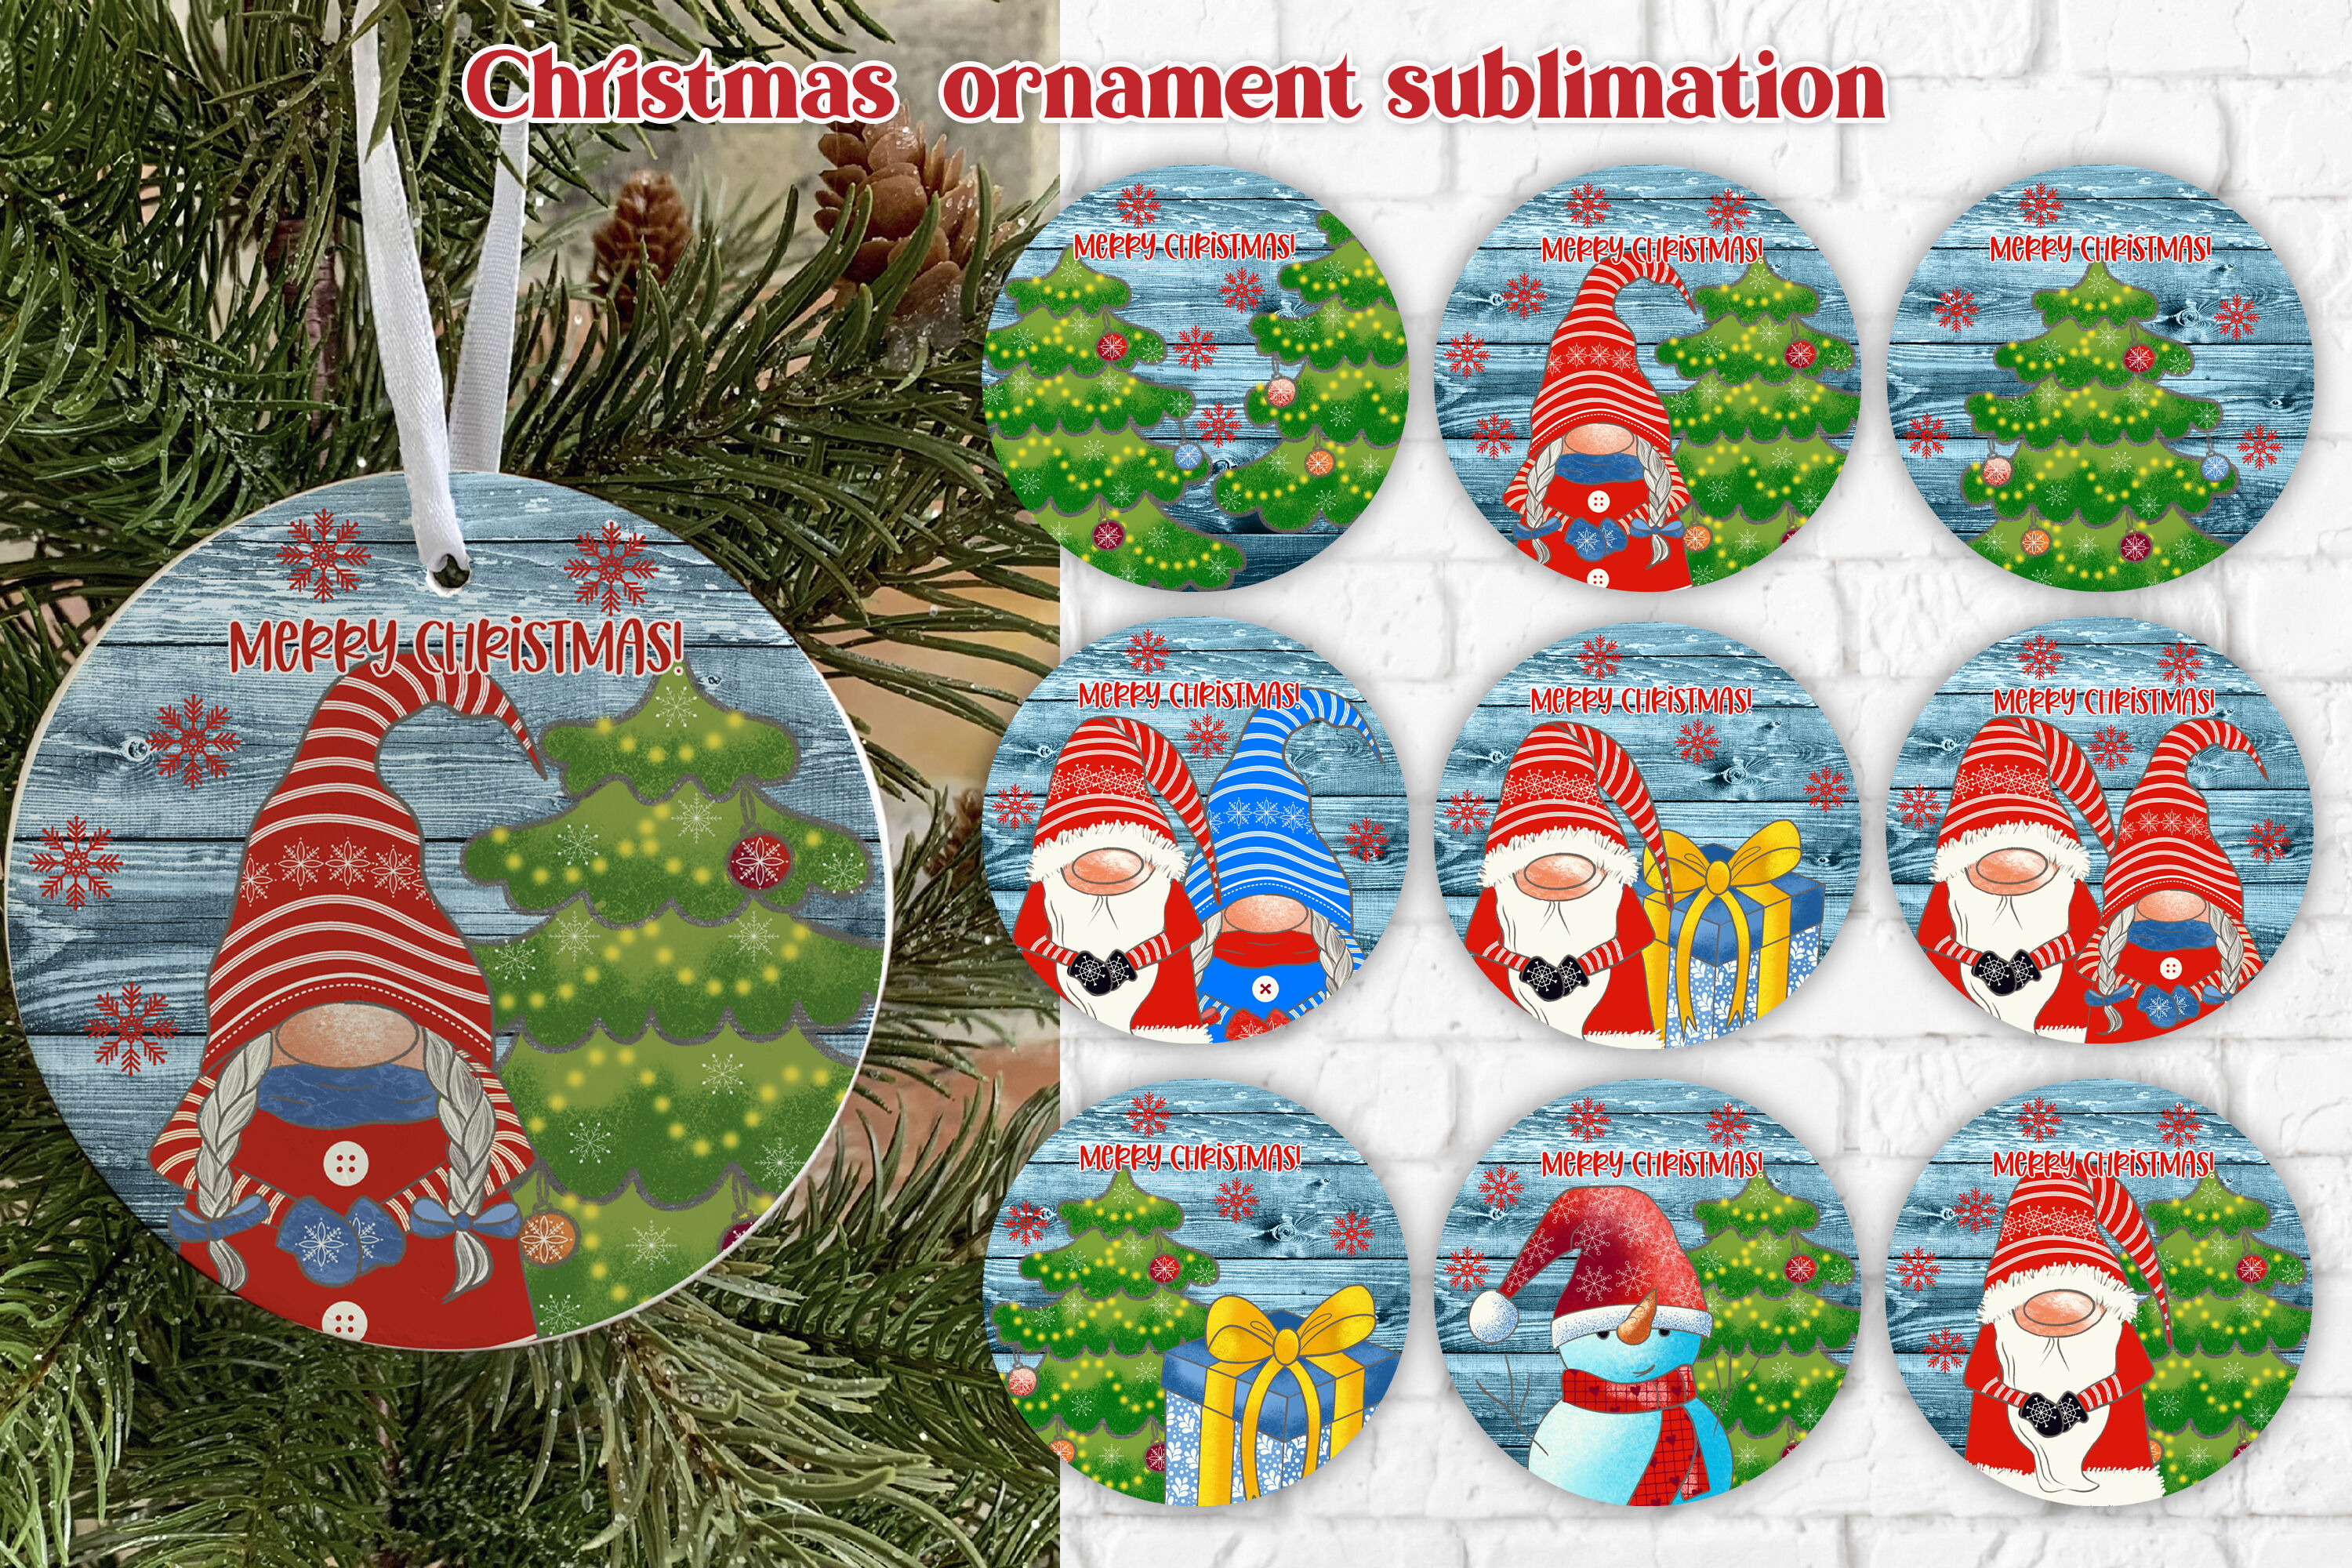 https://media1.thehungryjpeg.com/thumbs2/ori_4201795_ci1izw4fvh4kor8v6t3tbwkdg4qg6m0fbchtrgx6_christmas-ornaments-sublimation-gnome-christmas-ornaments.jpg